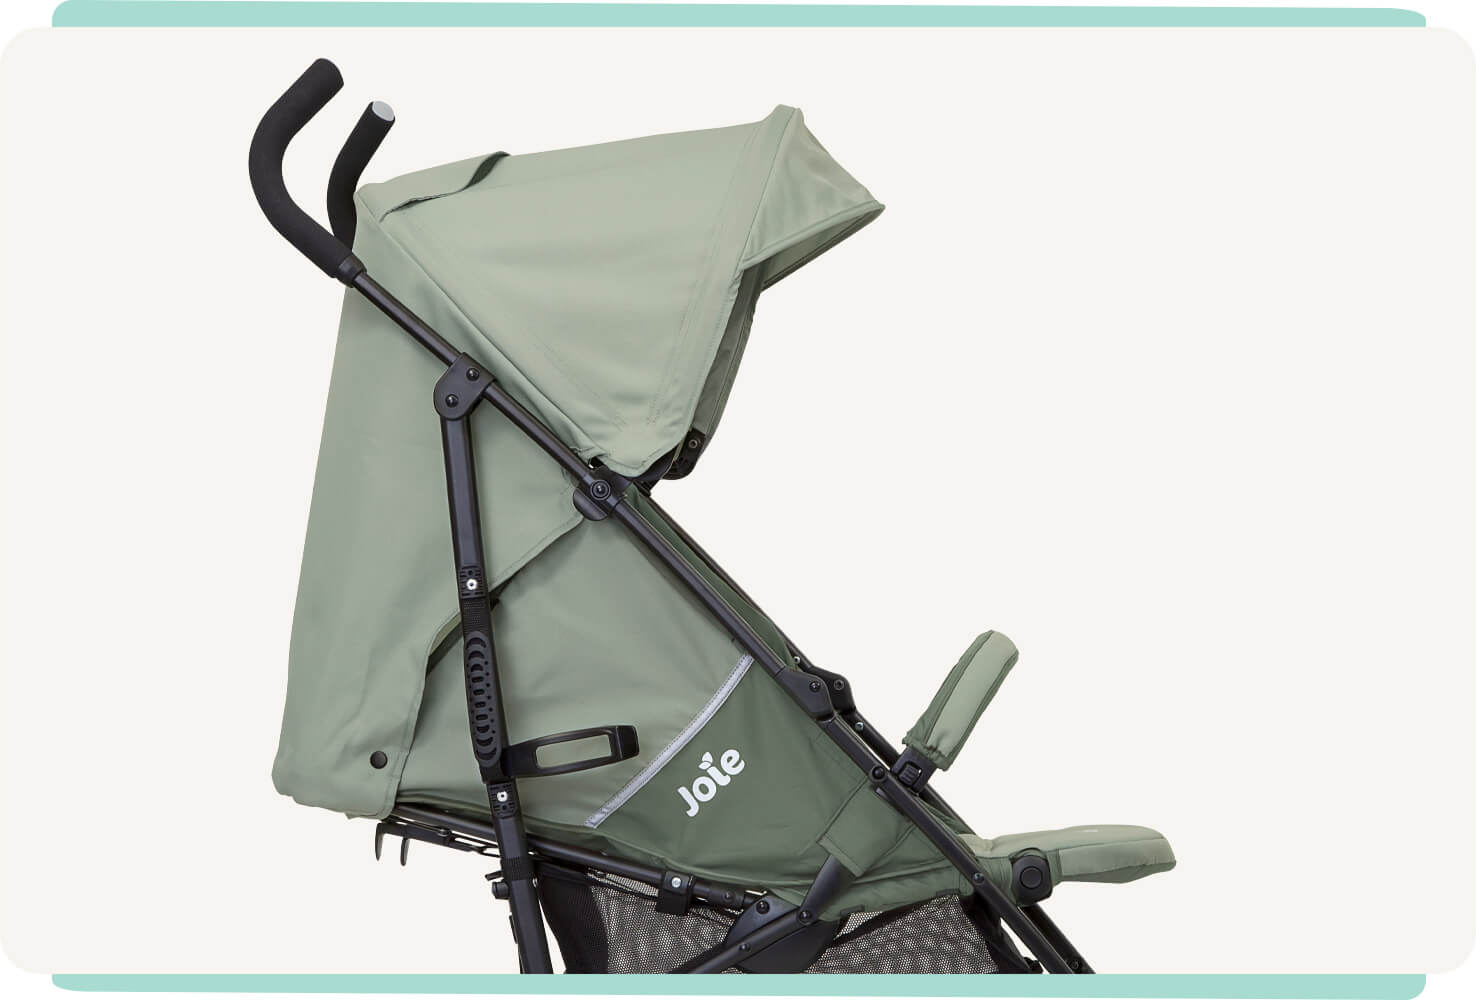  Side profile of Joie green nitro stroller.